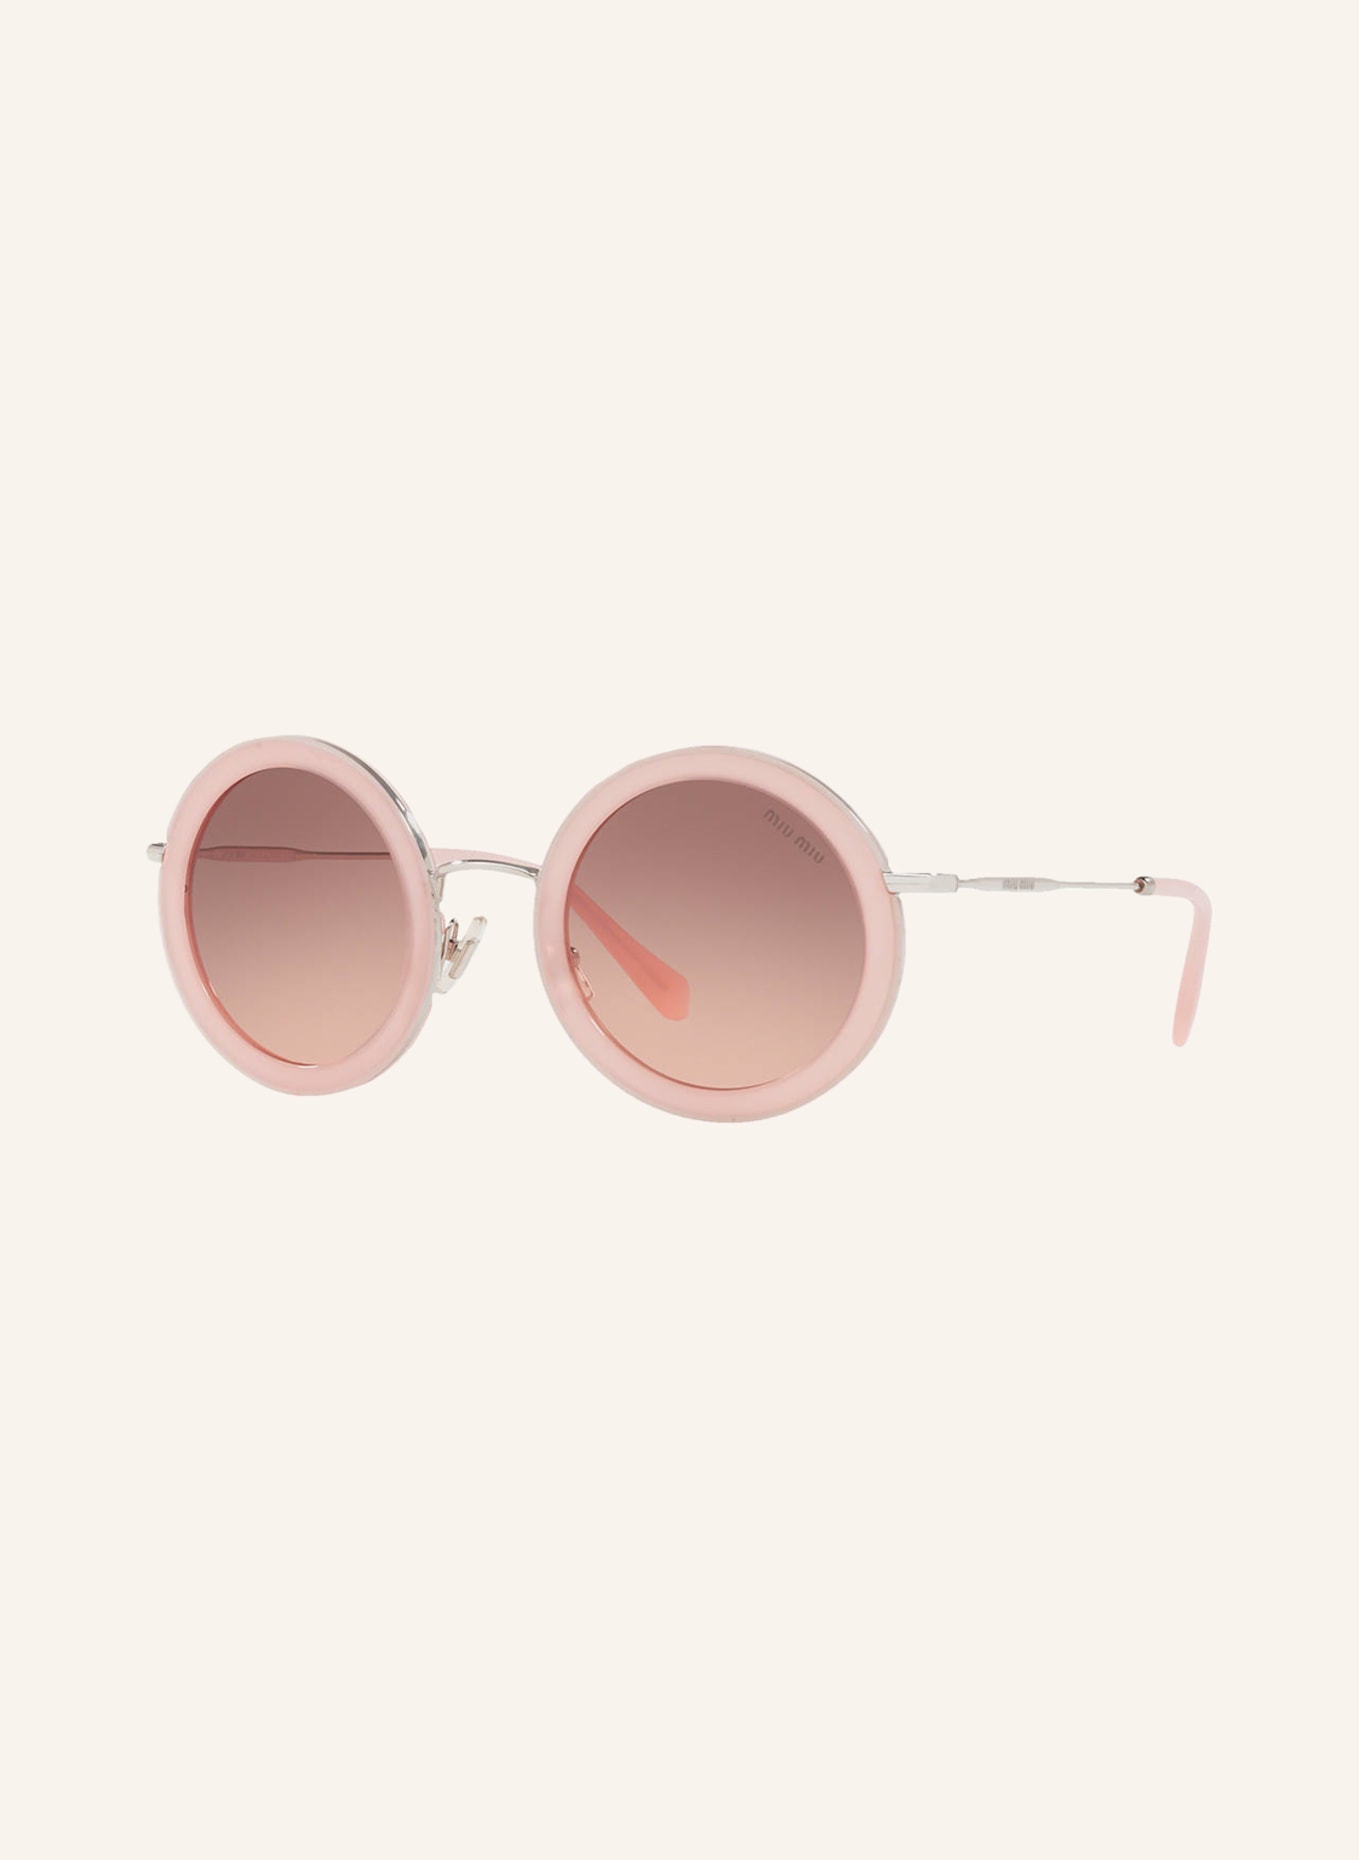 MIU MIU Sunglasses MU 59US, Color: 135/0A5 - LIGHT PINK/ROSÉ (Image 1)